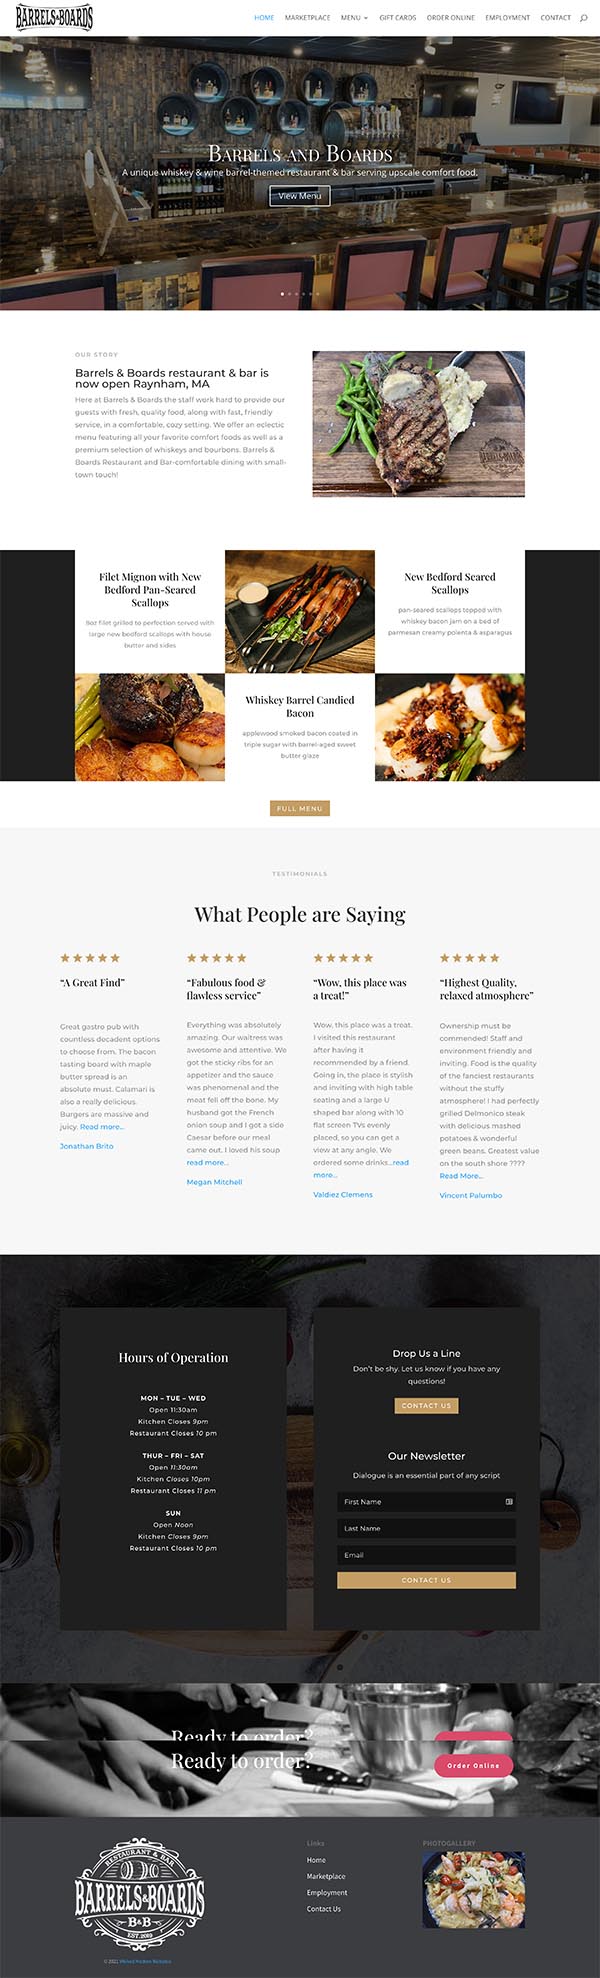 Restaurant Website Design Company